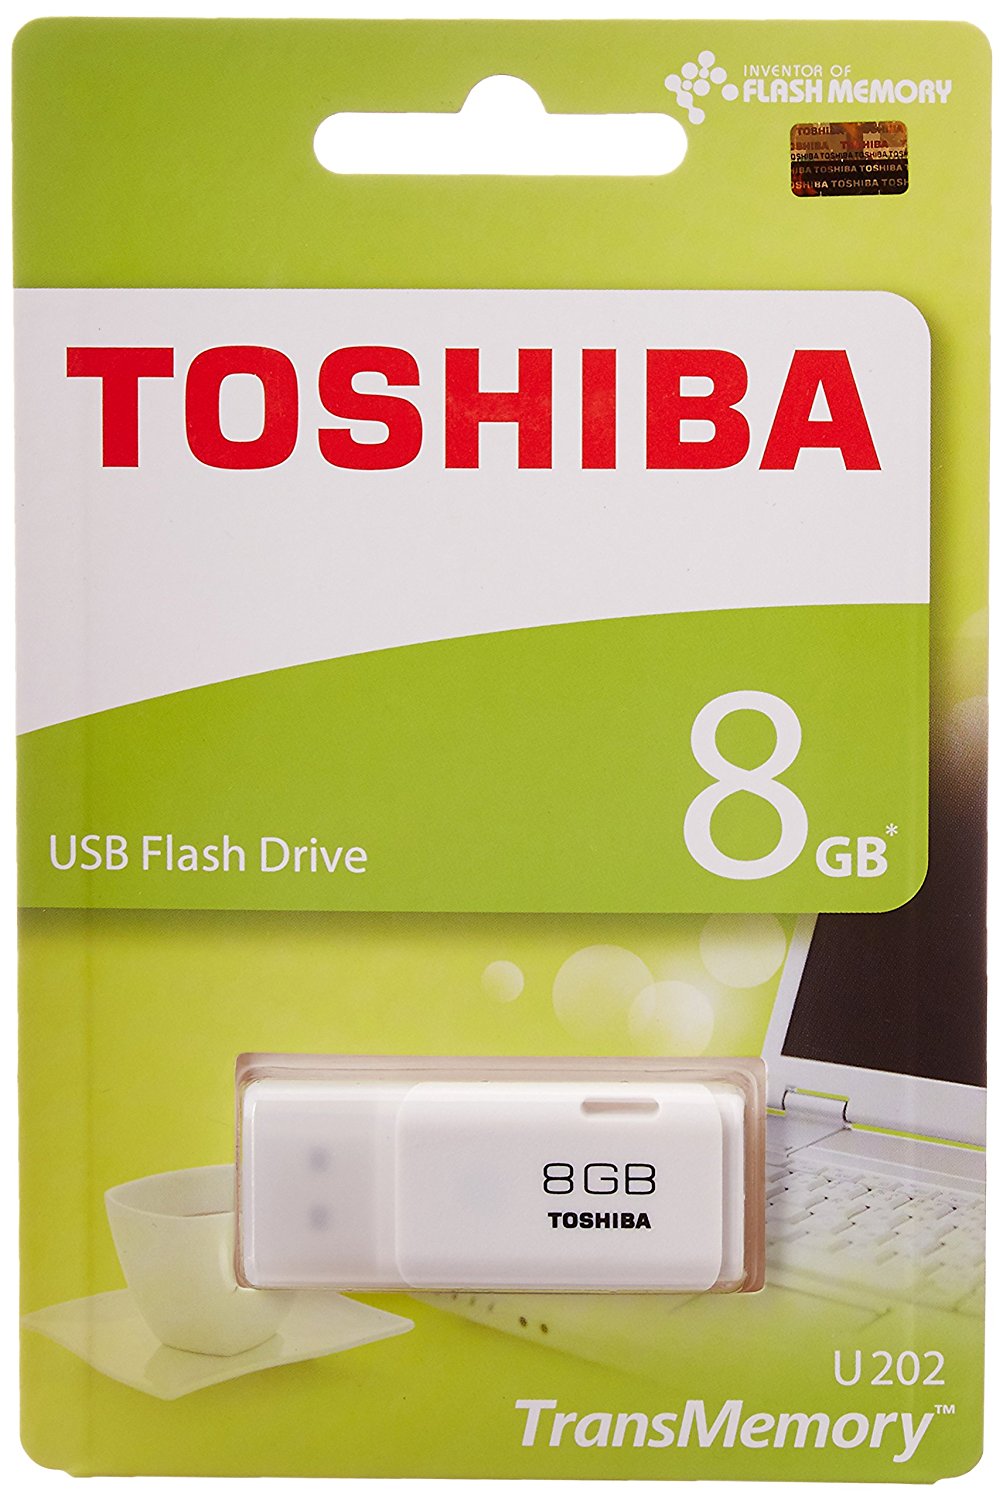 Toshiba 8GB Flash drive